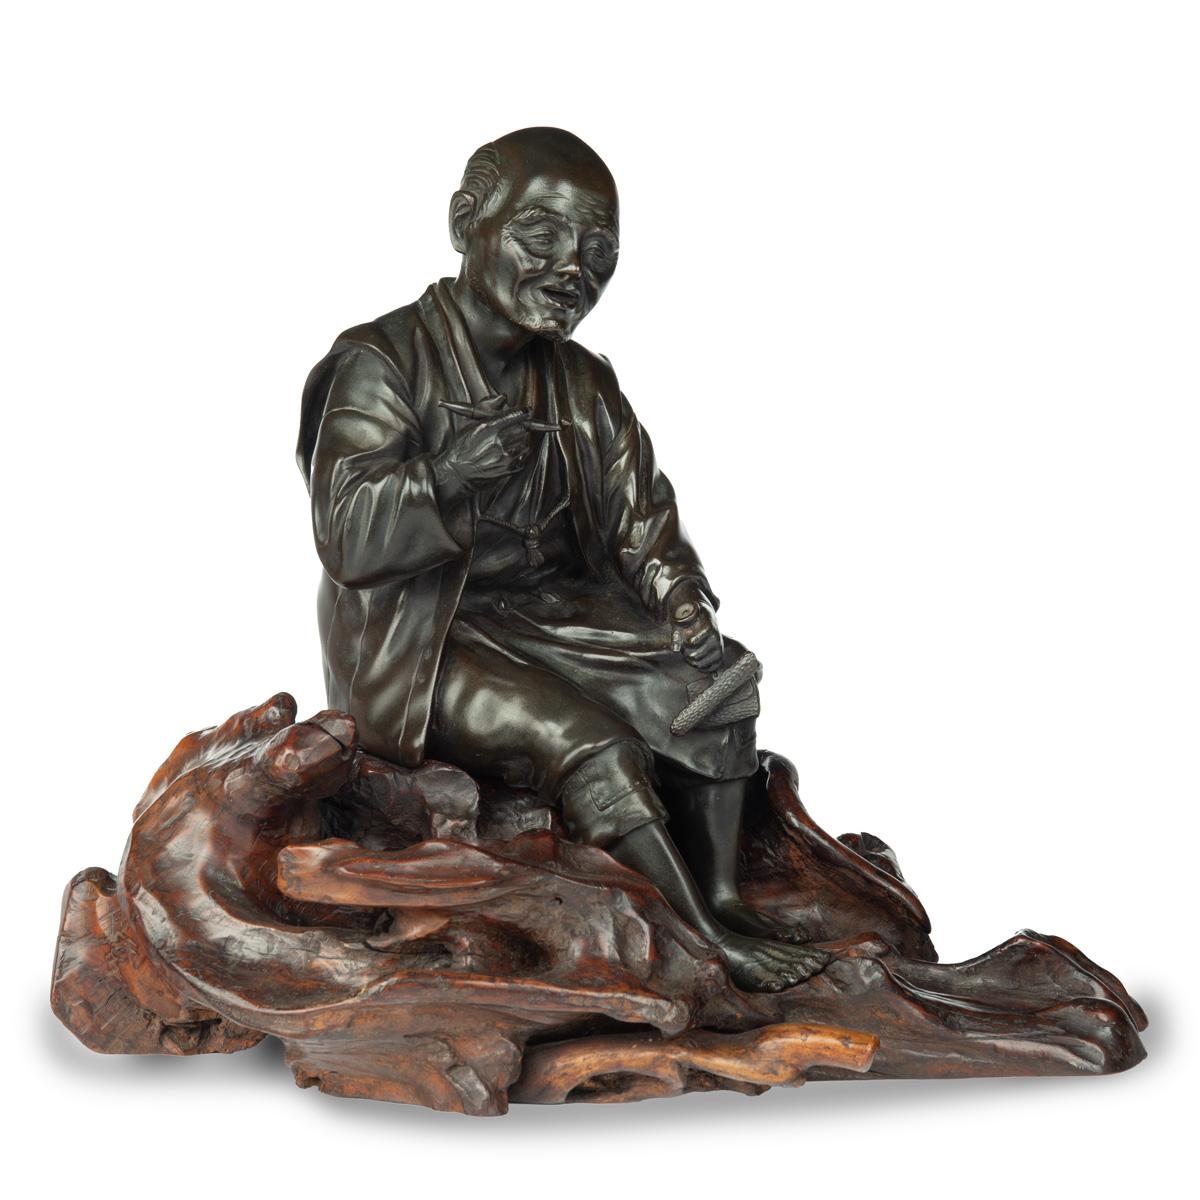 Meiji period bronze of a seated man smoking